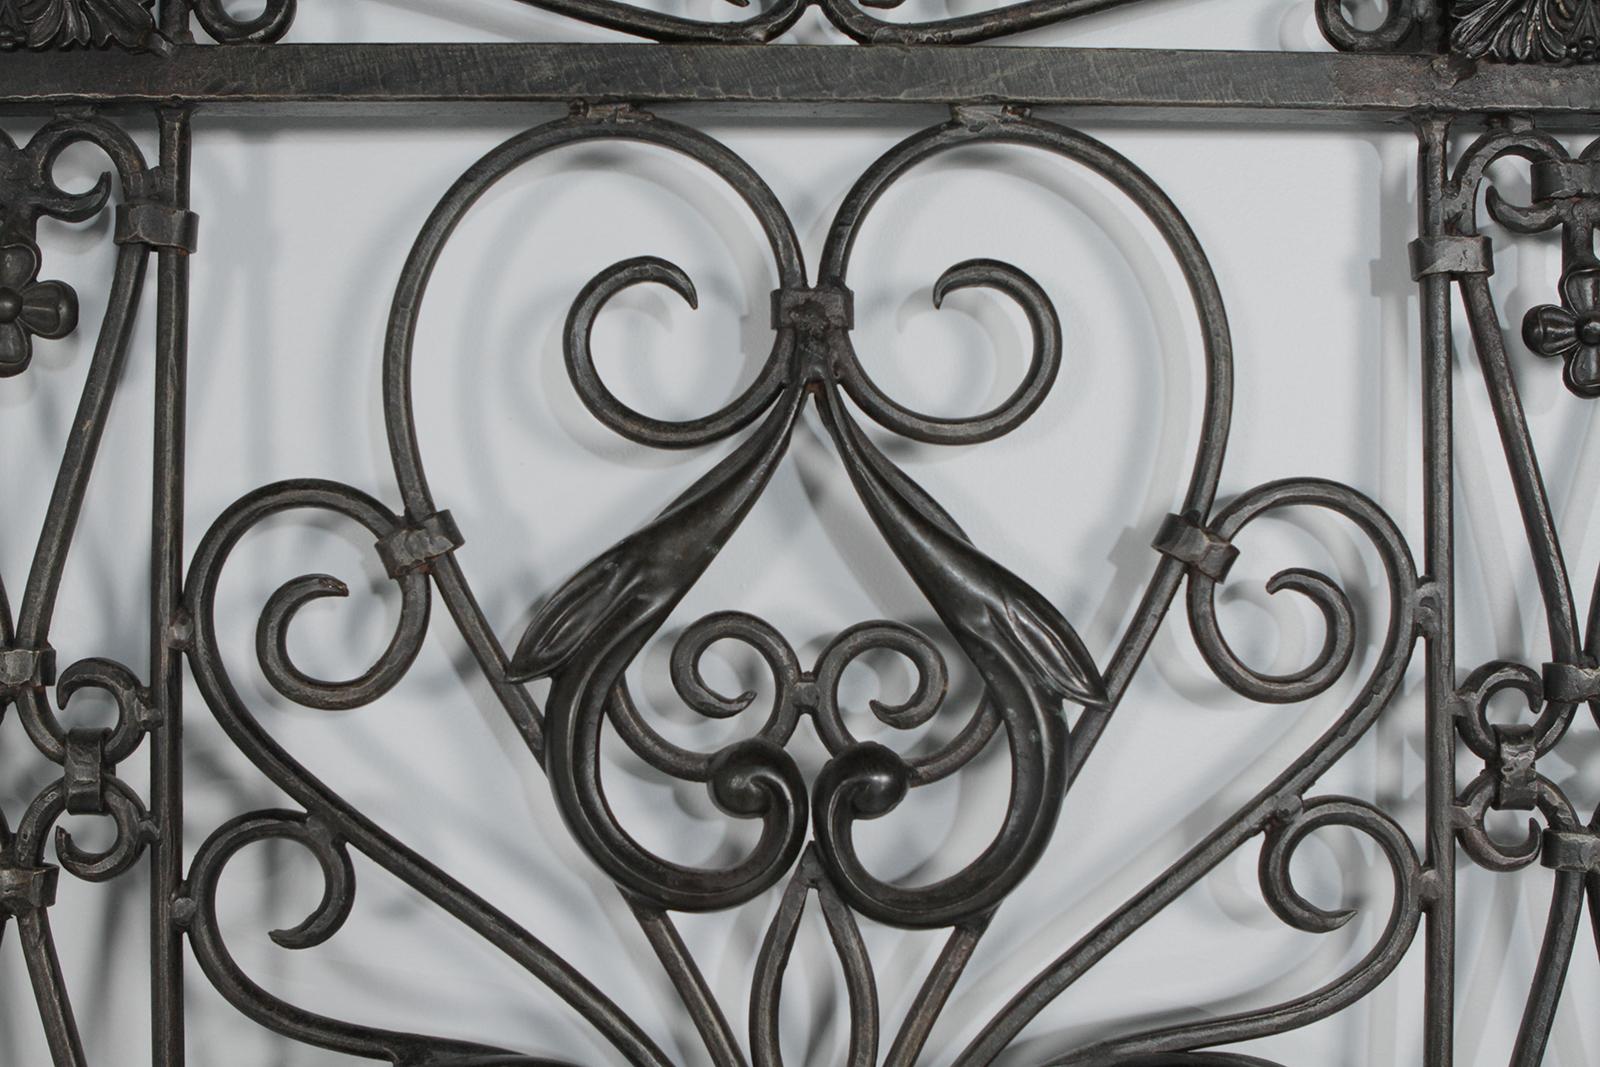 Super Impressive Pair of European Hand Wrought Iron Ornate Architectural Gates 2